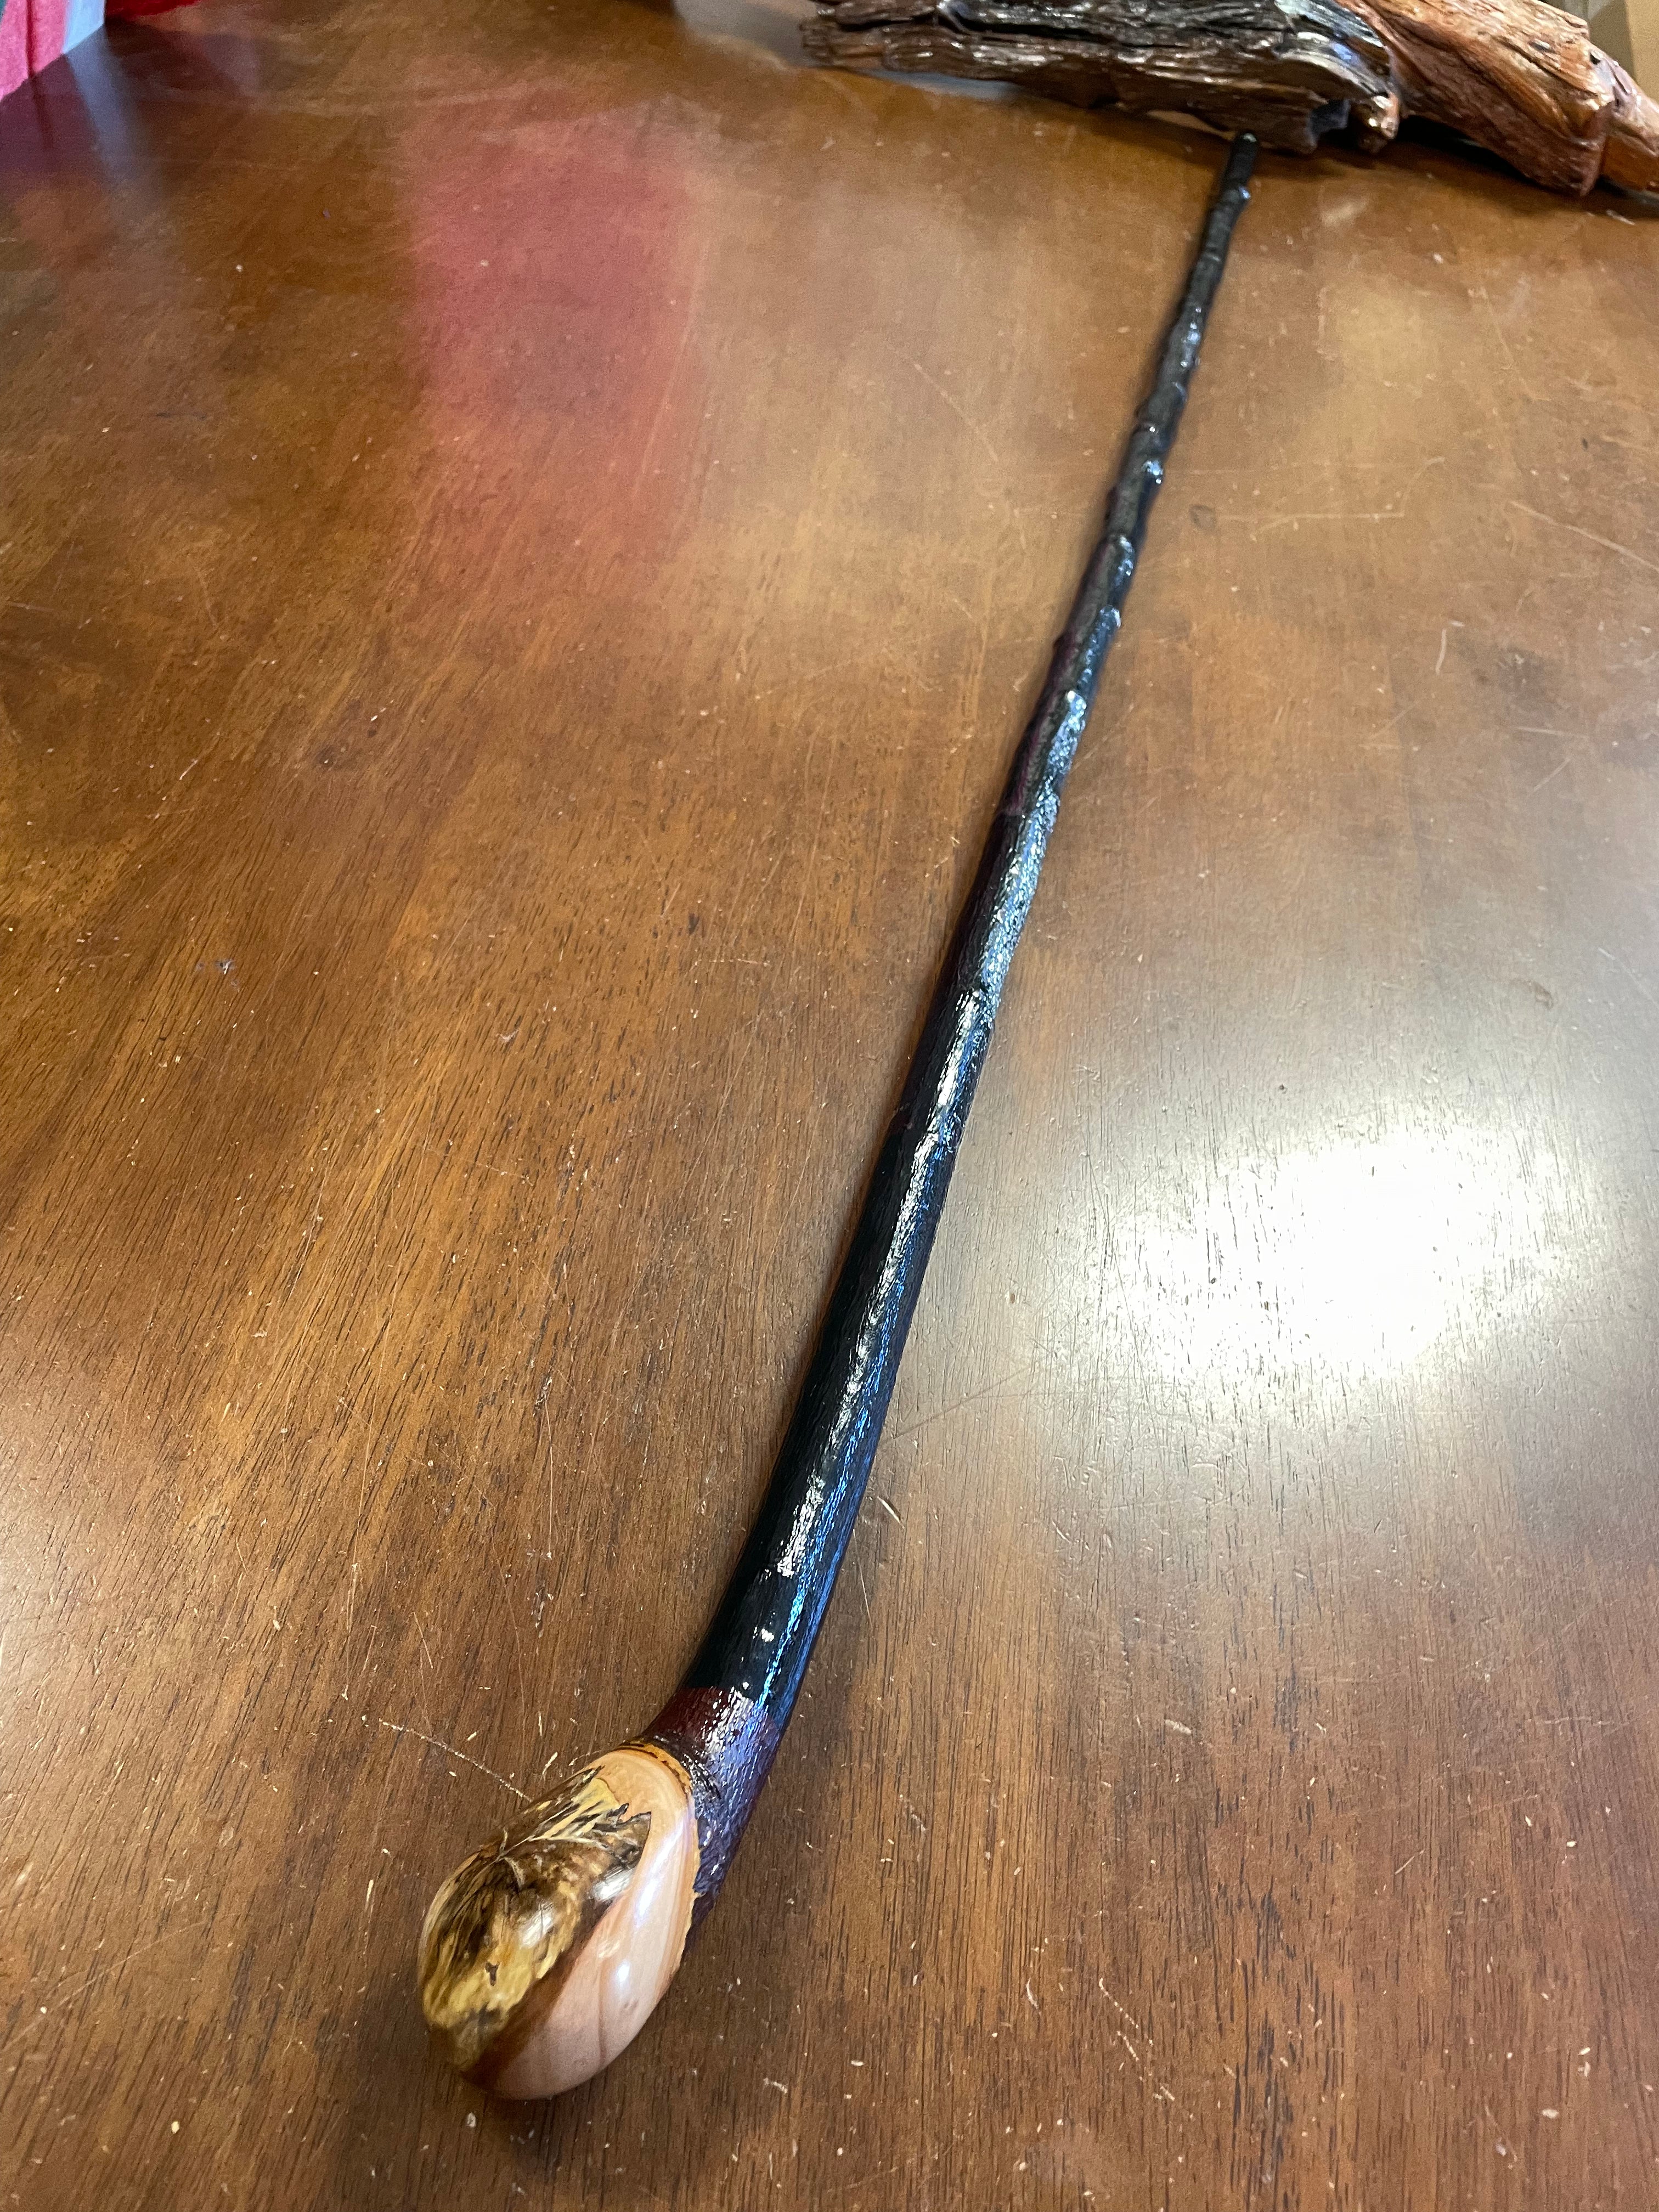 Blackthorn Walking Stick 39 1/4 inch  - Handmade in Ireland